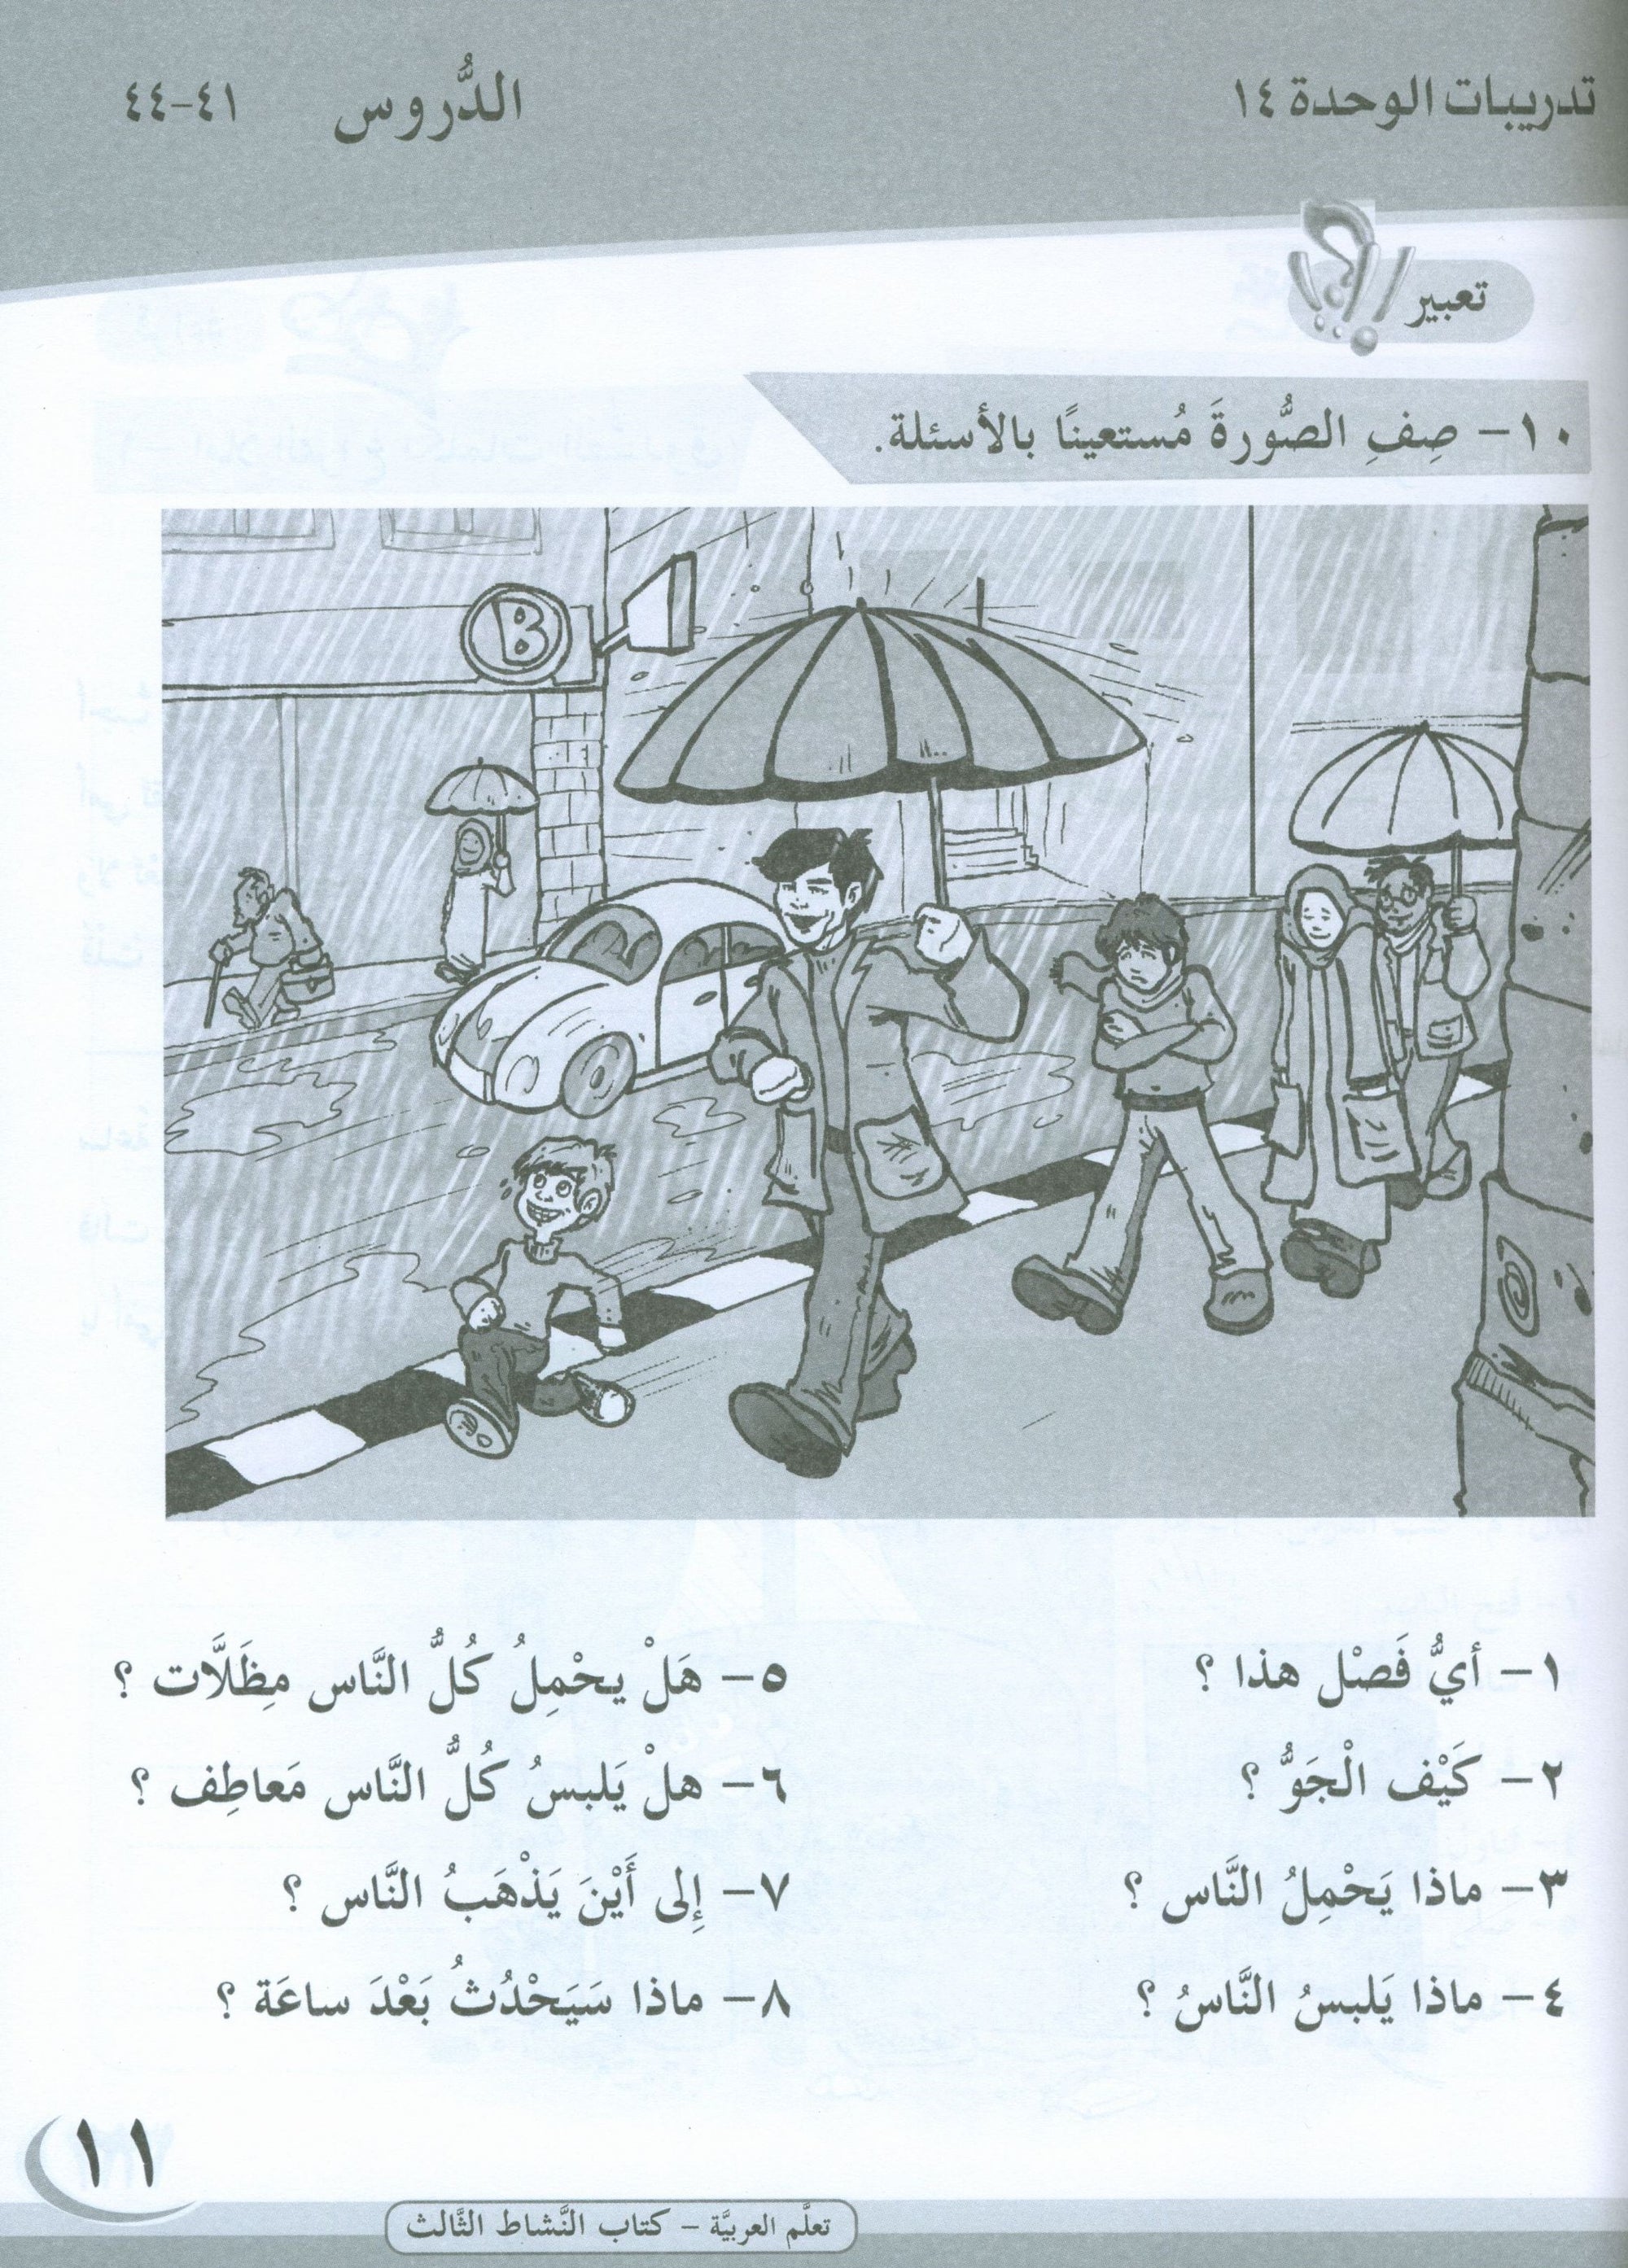 ICO Learn Arabic Workbook Level 3 Part 2 تعلم العربية كتاب التدريبات